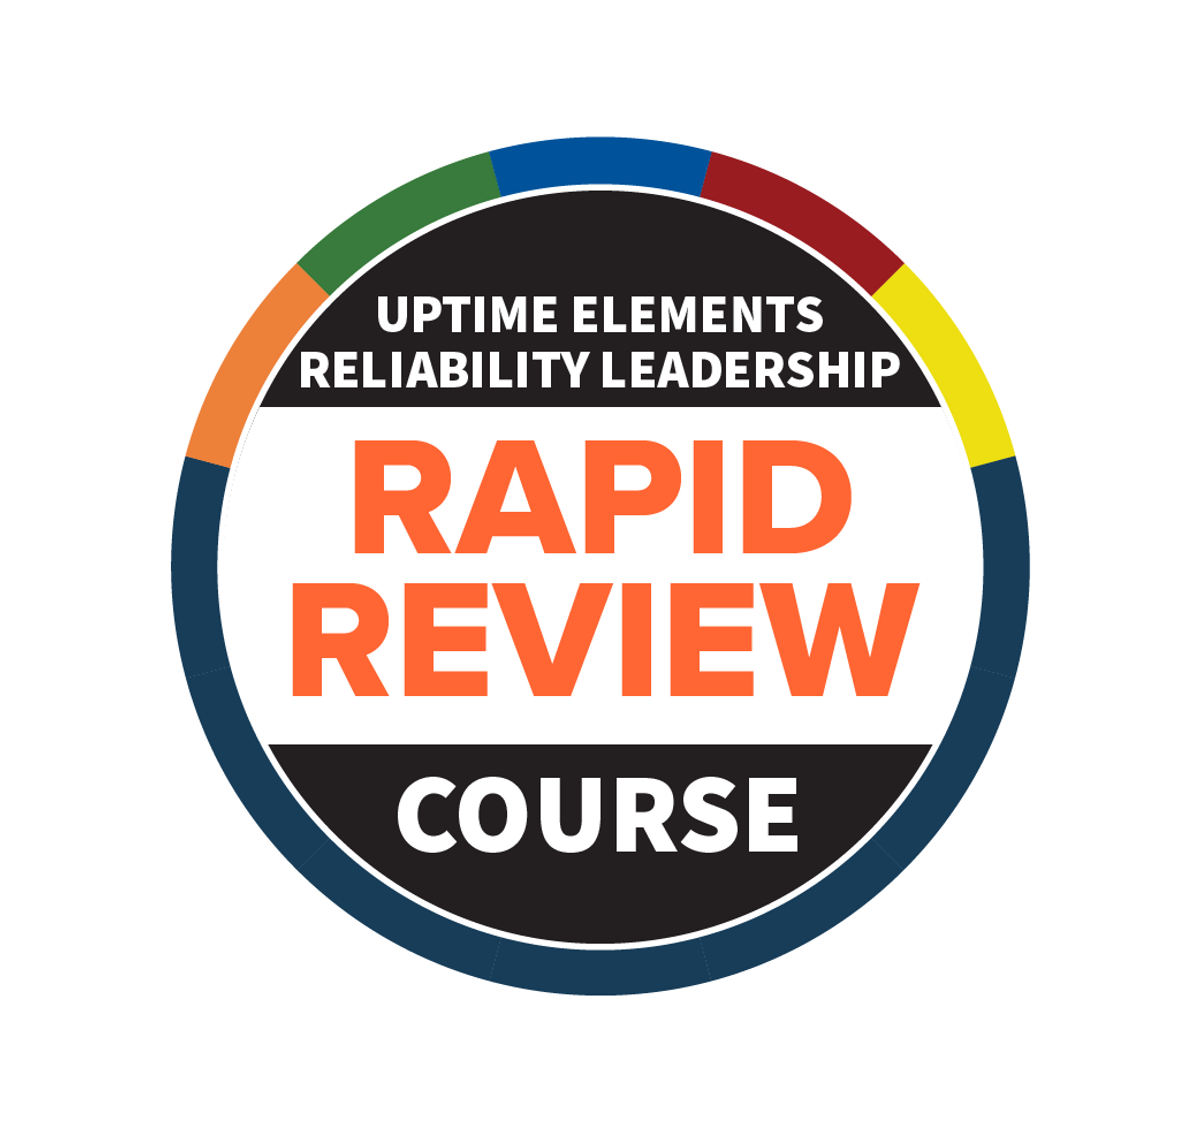 Uptime Elements Reliability Leadership Rapid Review Course